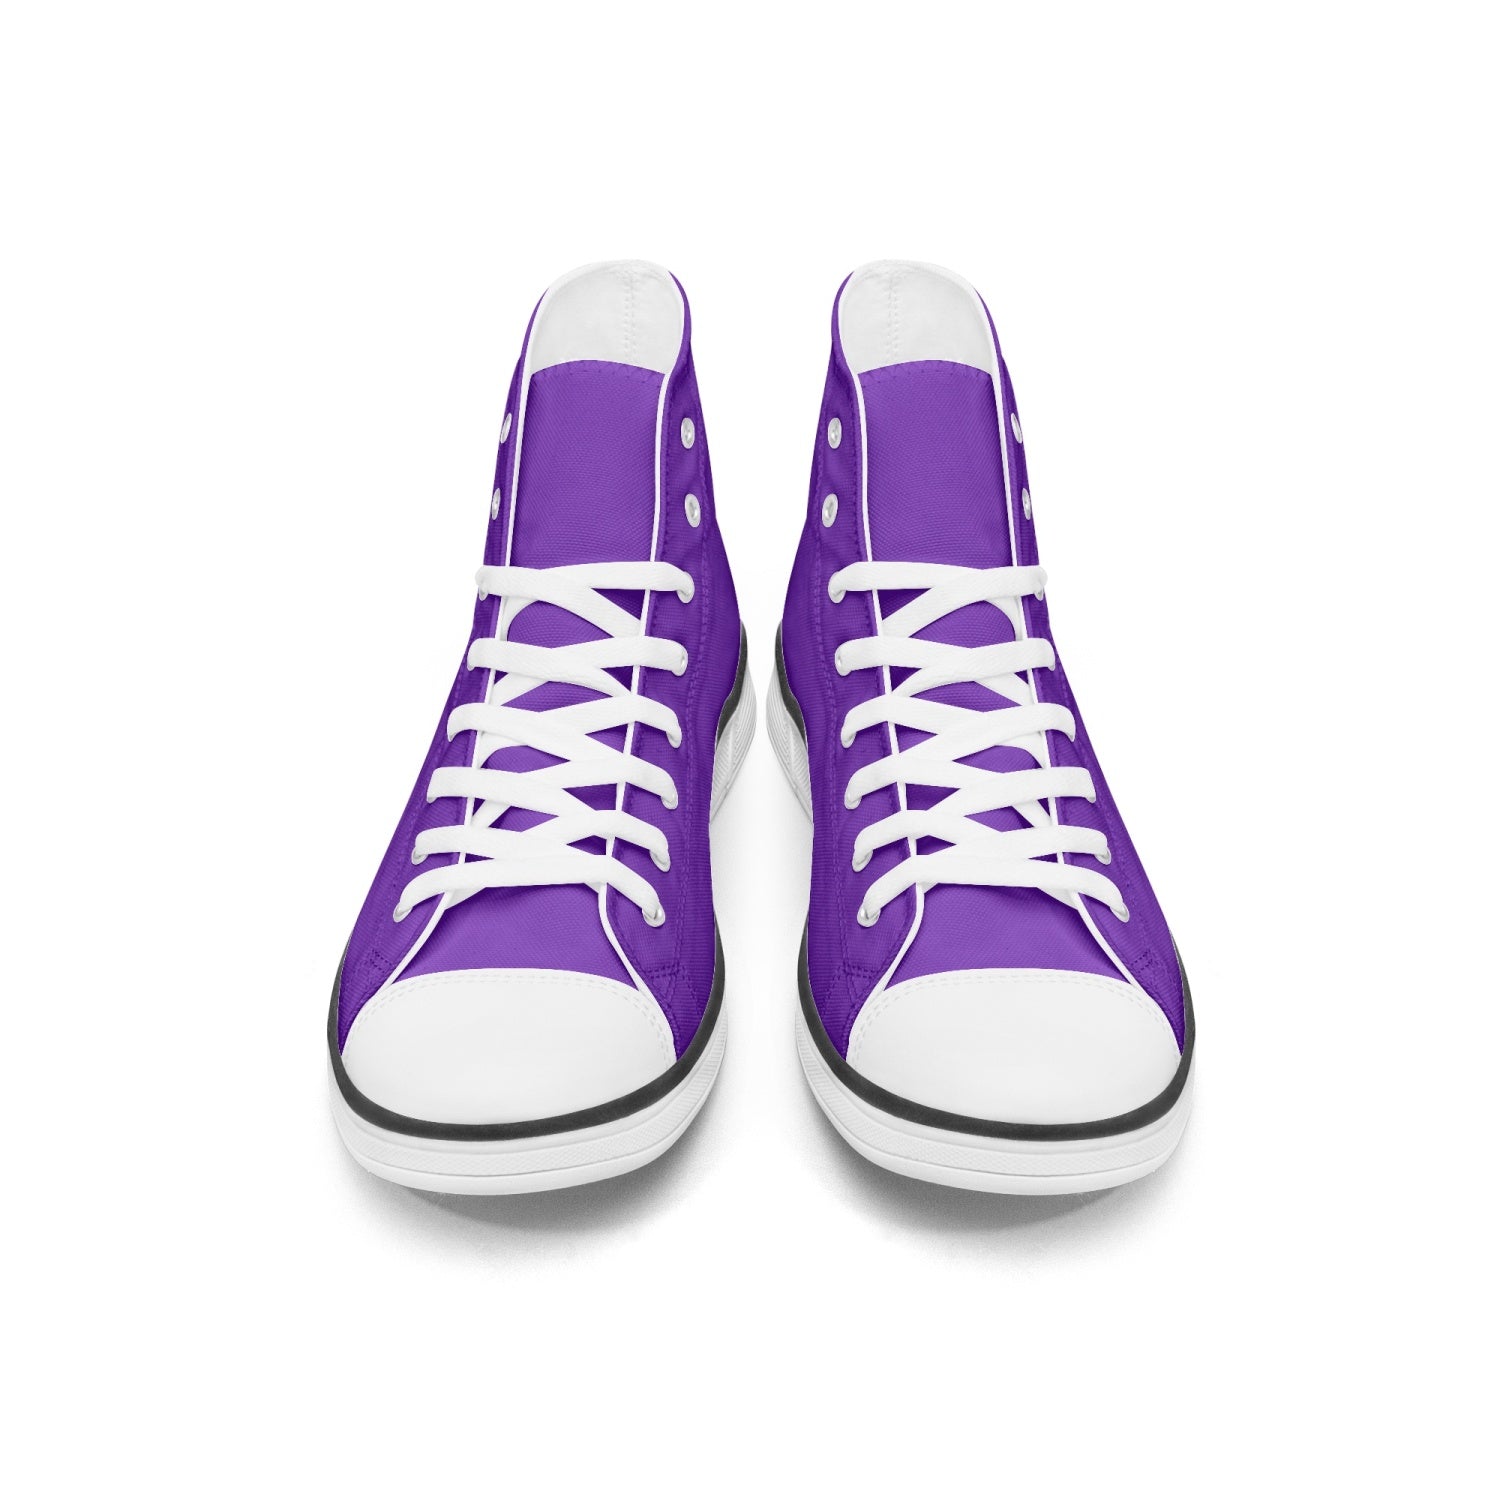 Grape Purple So 2022 Light Adult High-Top Canvas Shoes